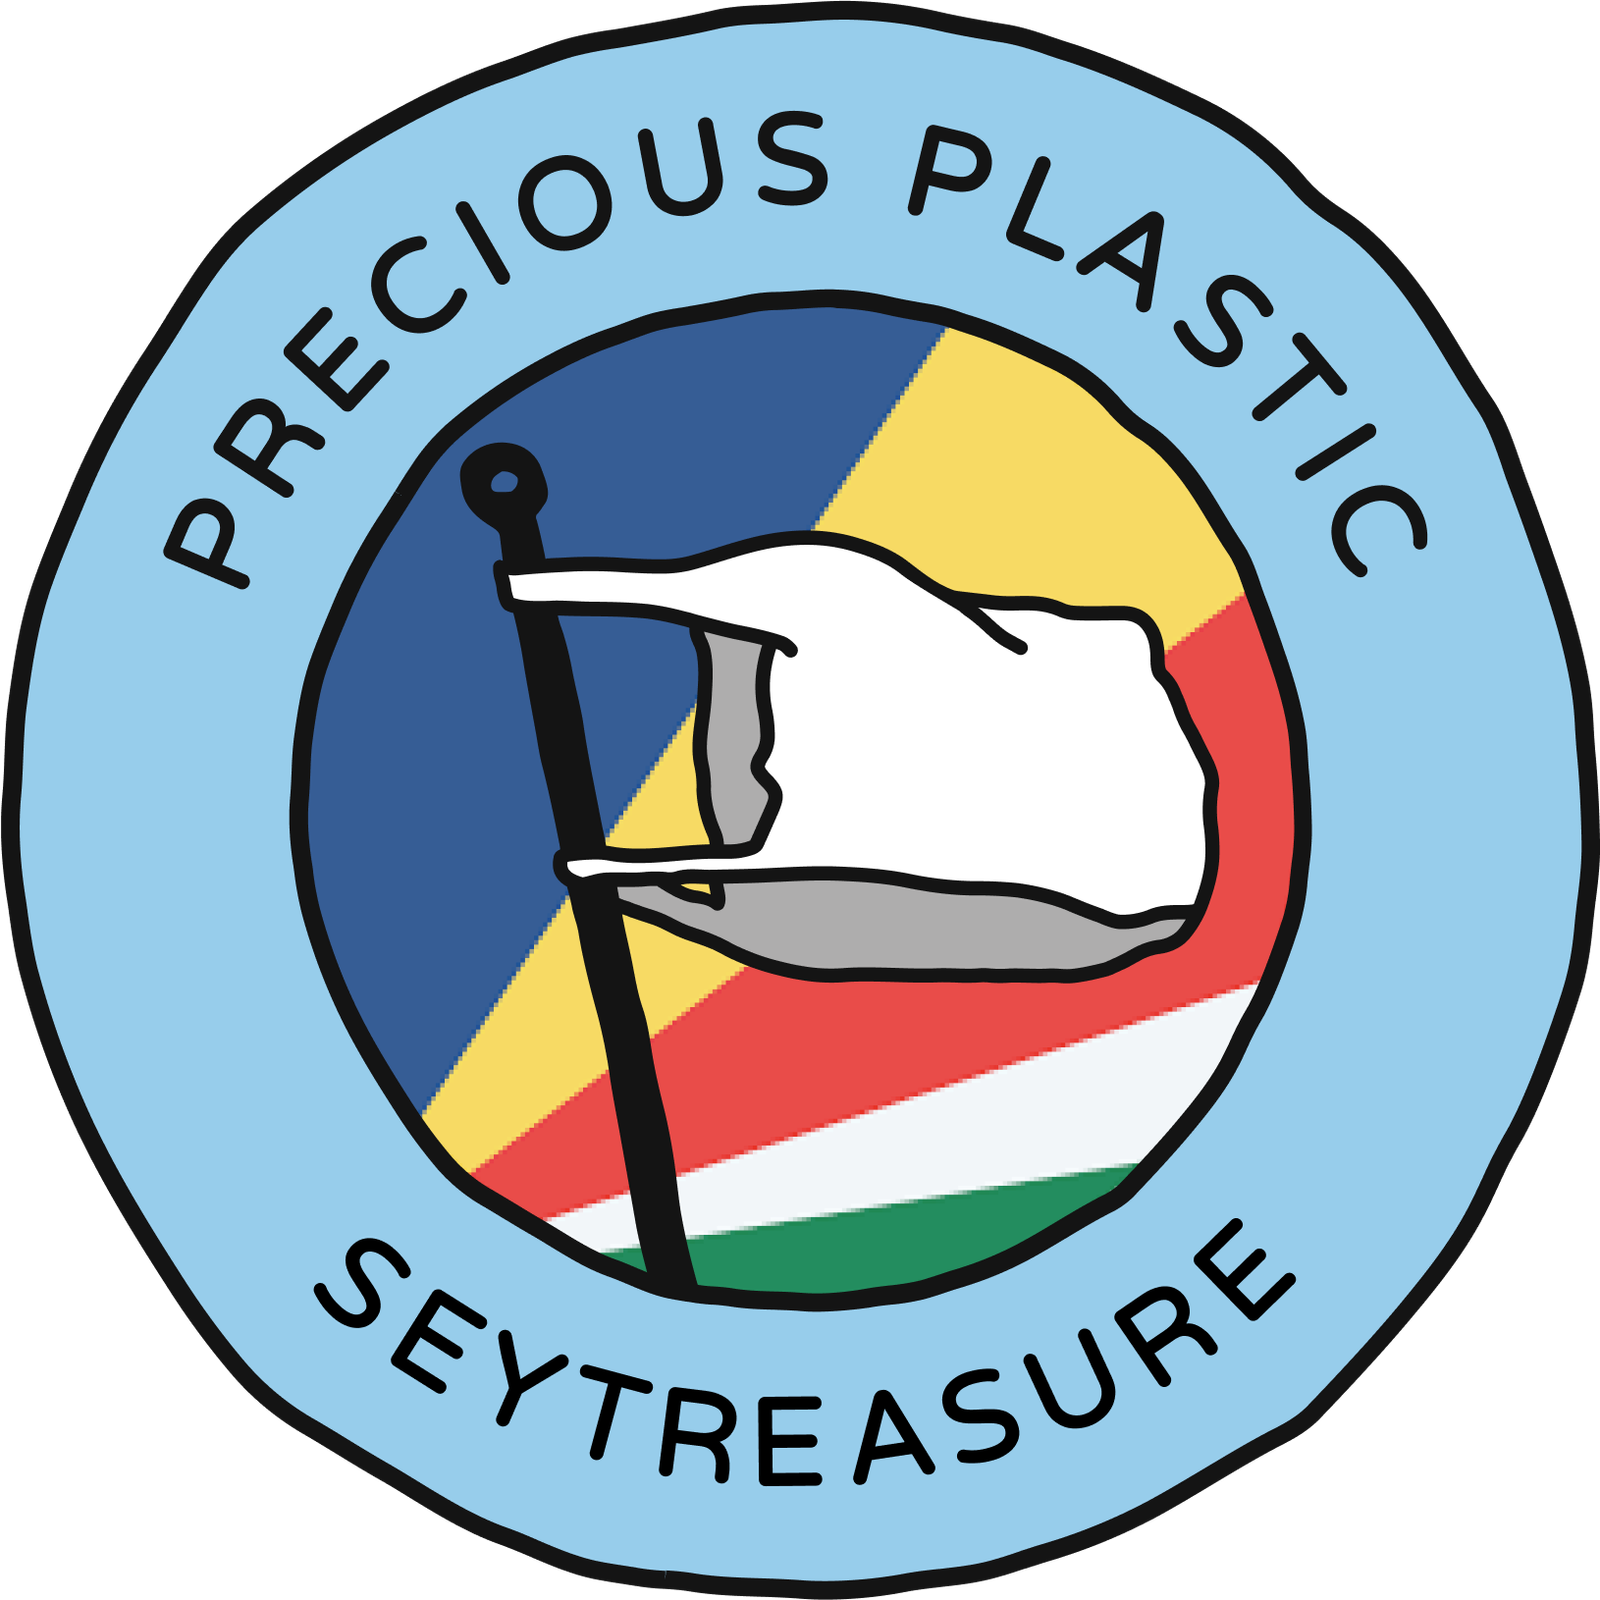 Precious-Plastic-Seytreasure